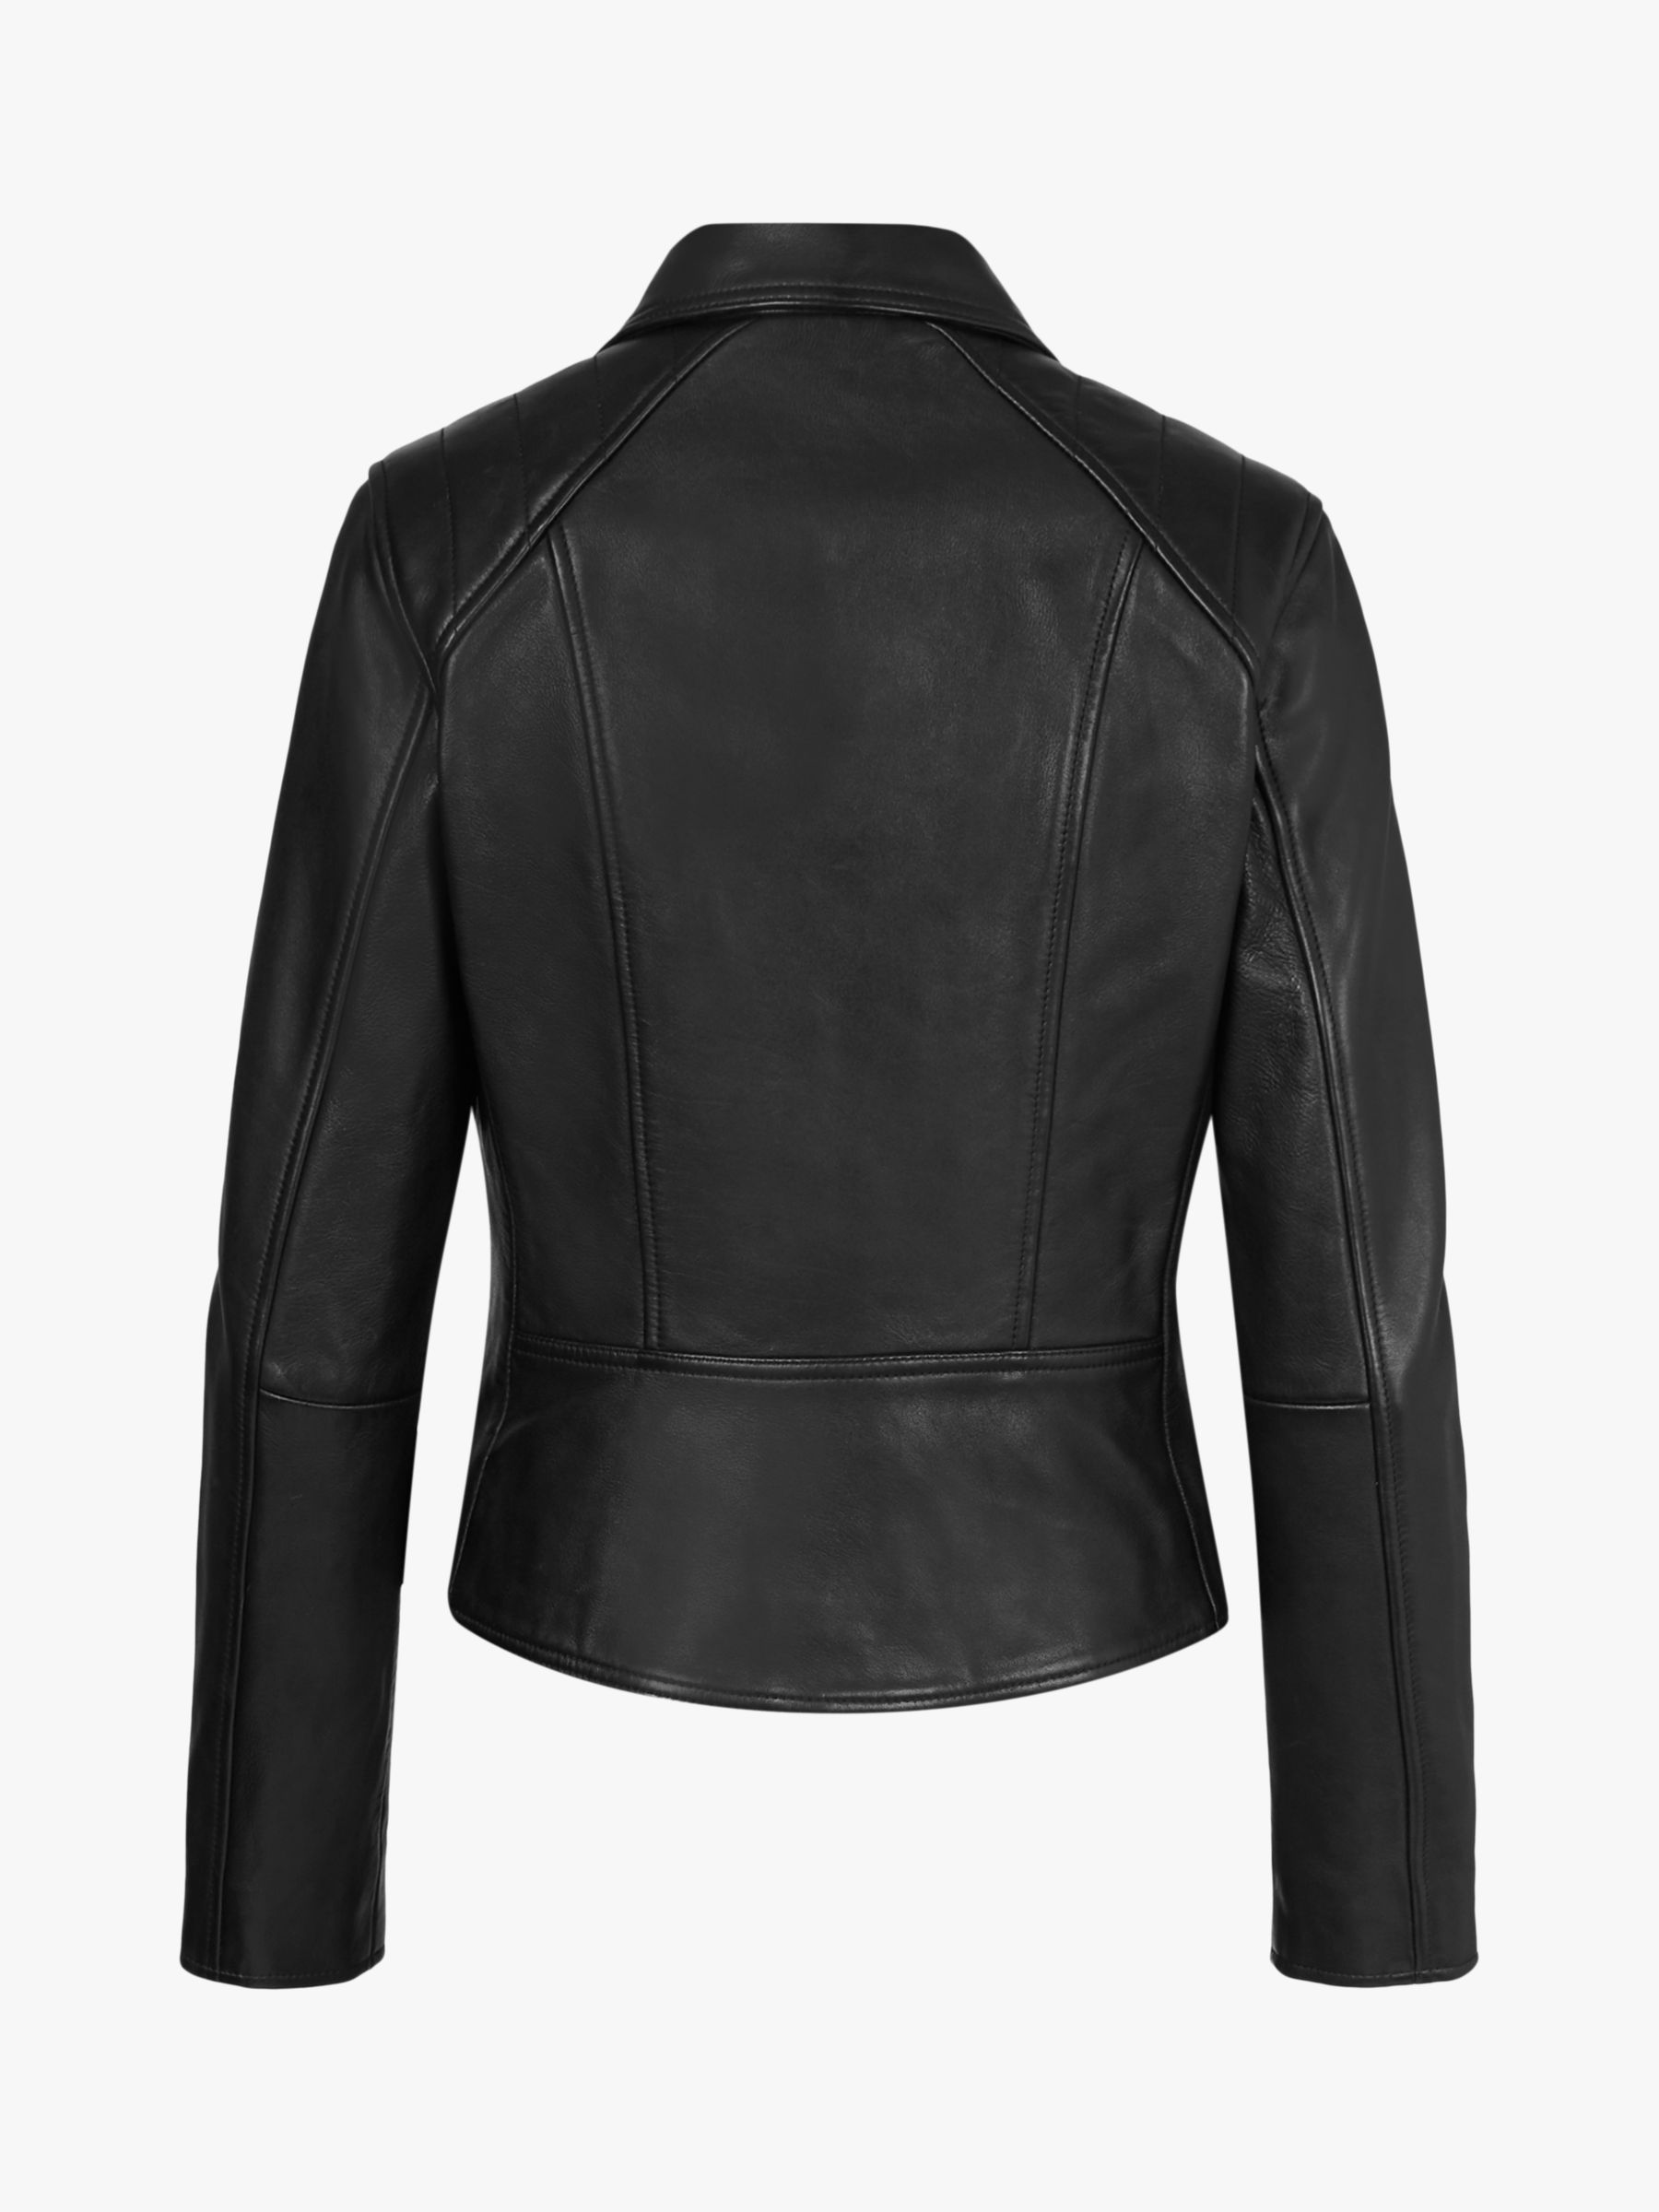 AllSaints Neve Quilted Leather Biker Jacket, Black at John Lewis & Partners